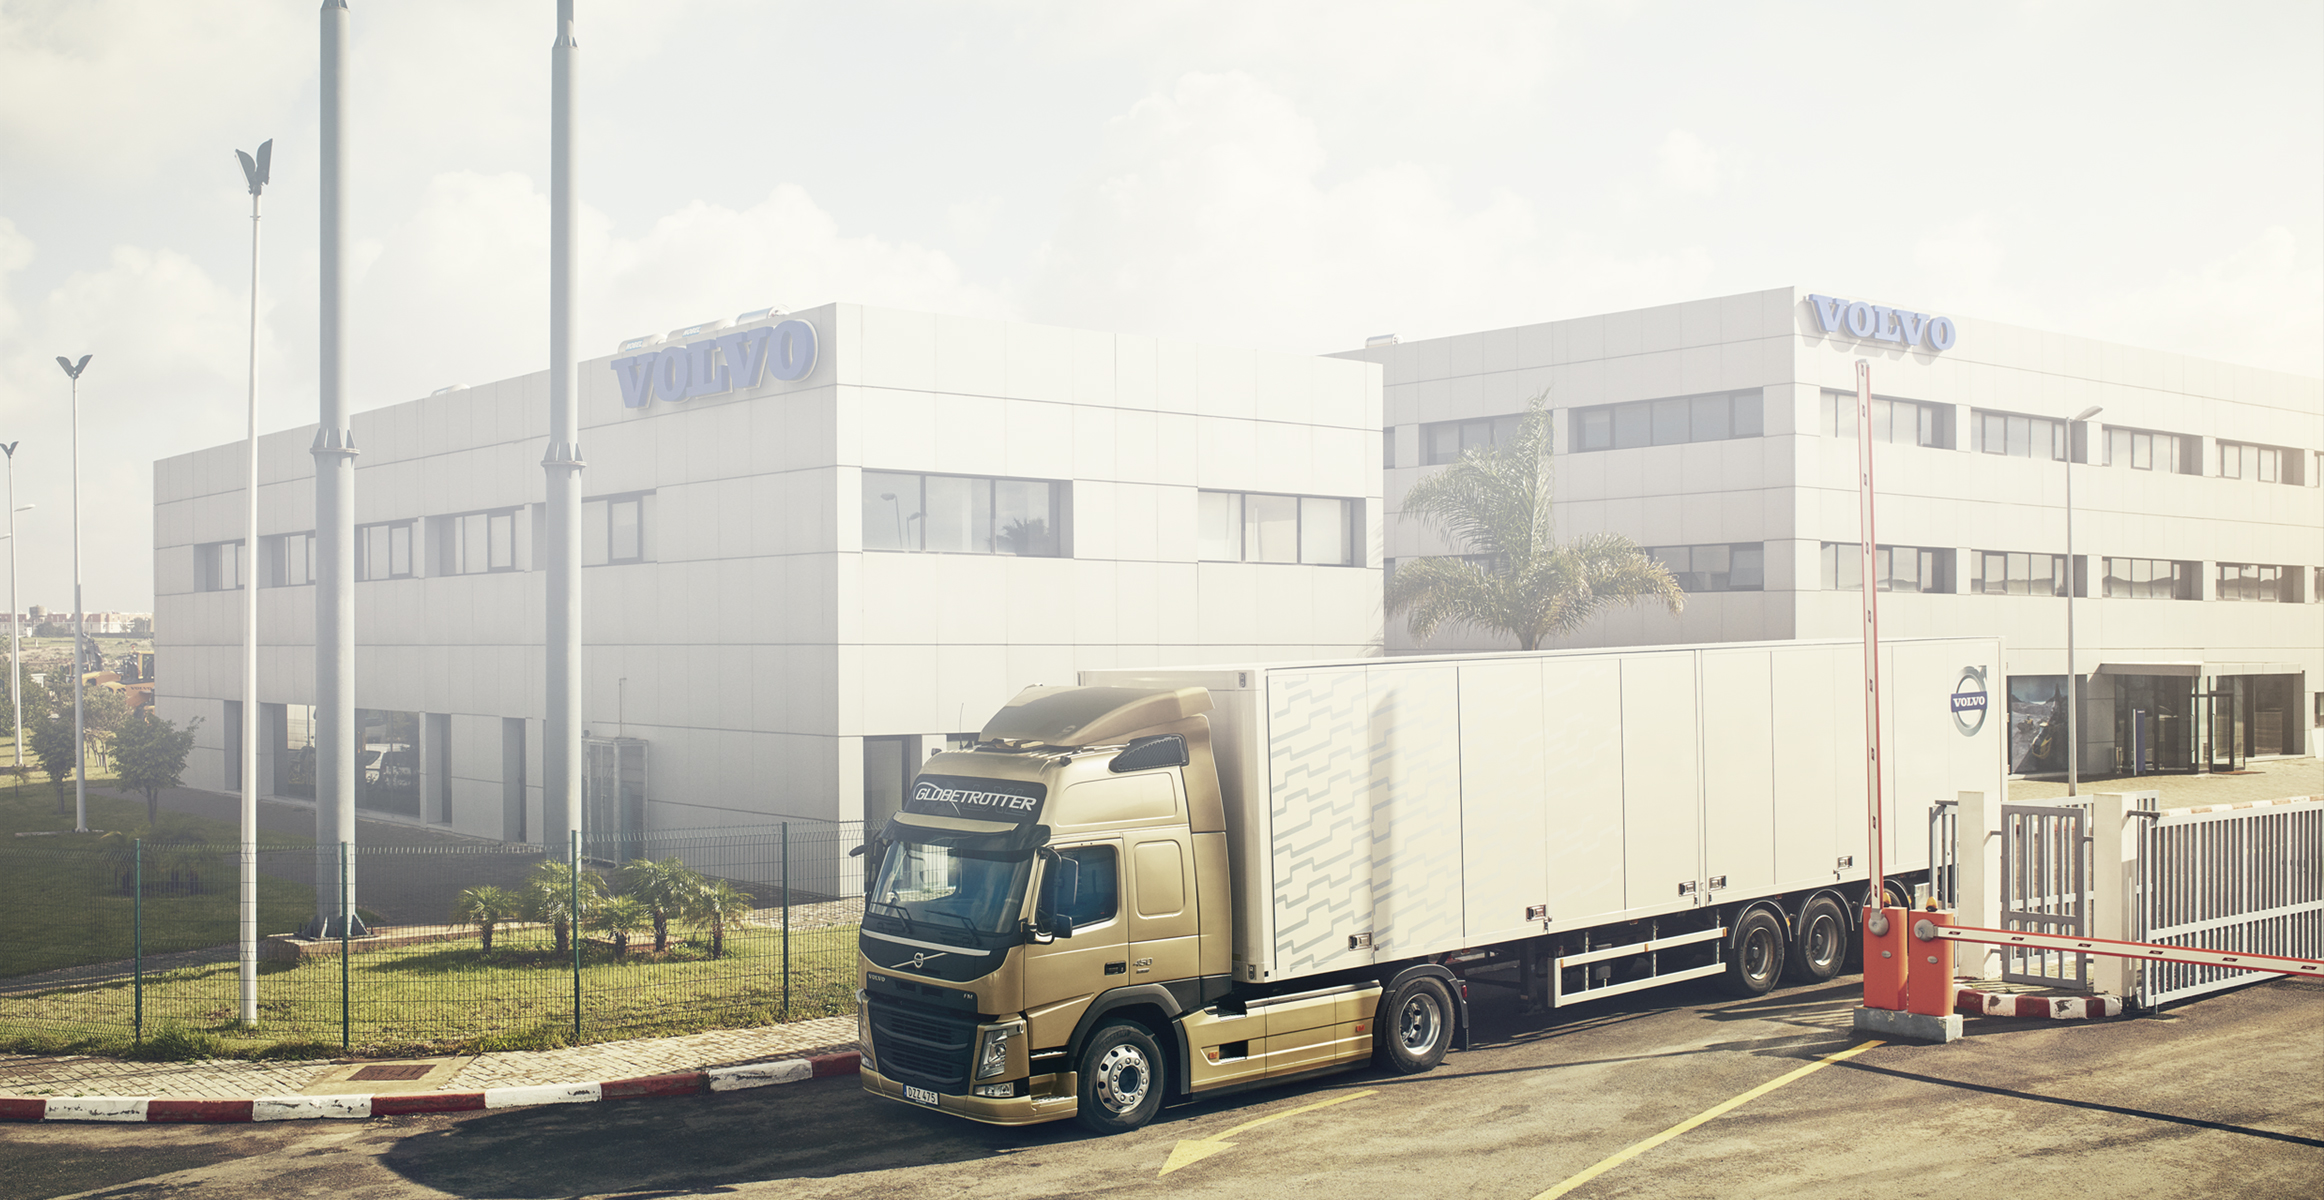 Volvo trucks servicing center